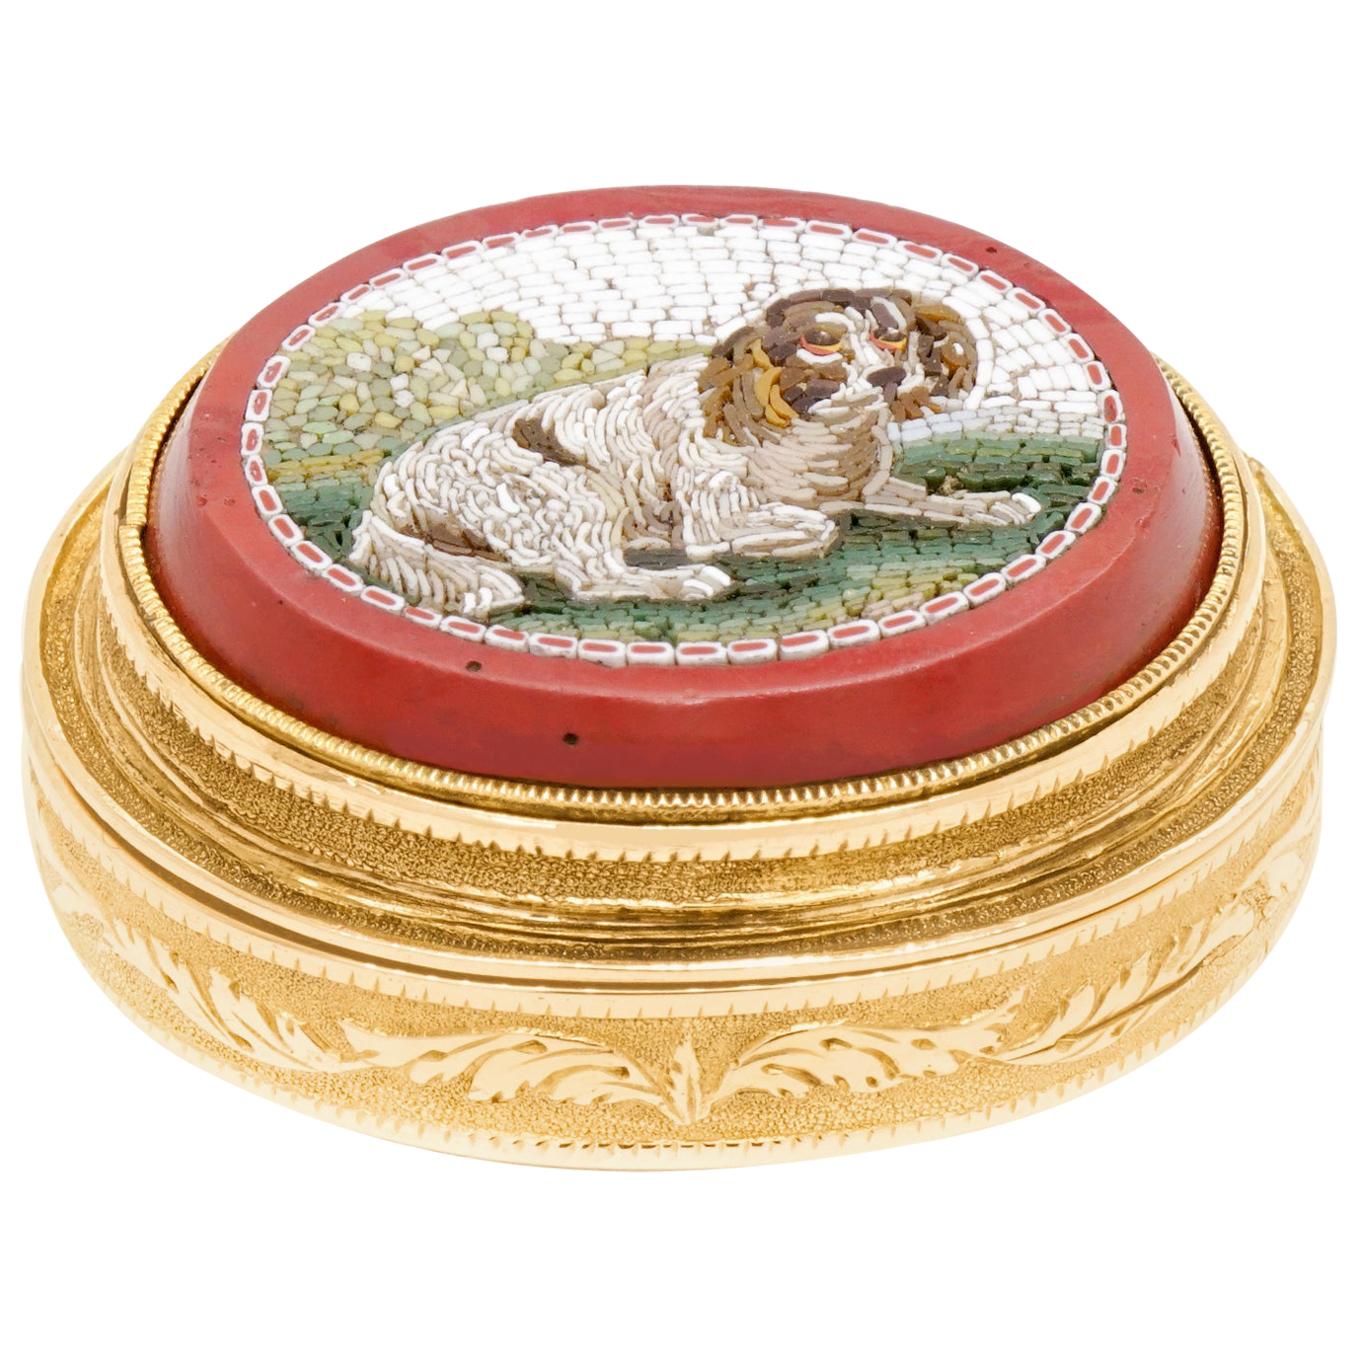 Spaniel Micro Mosaic Mounted on a Gold Vinaigrette, circa 1810s-1830s, France